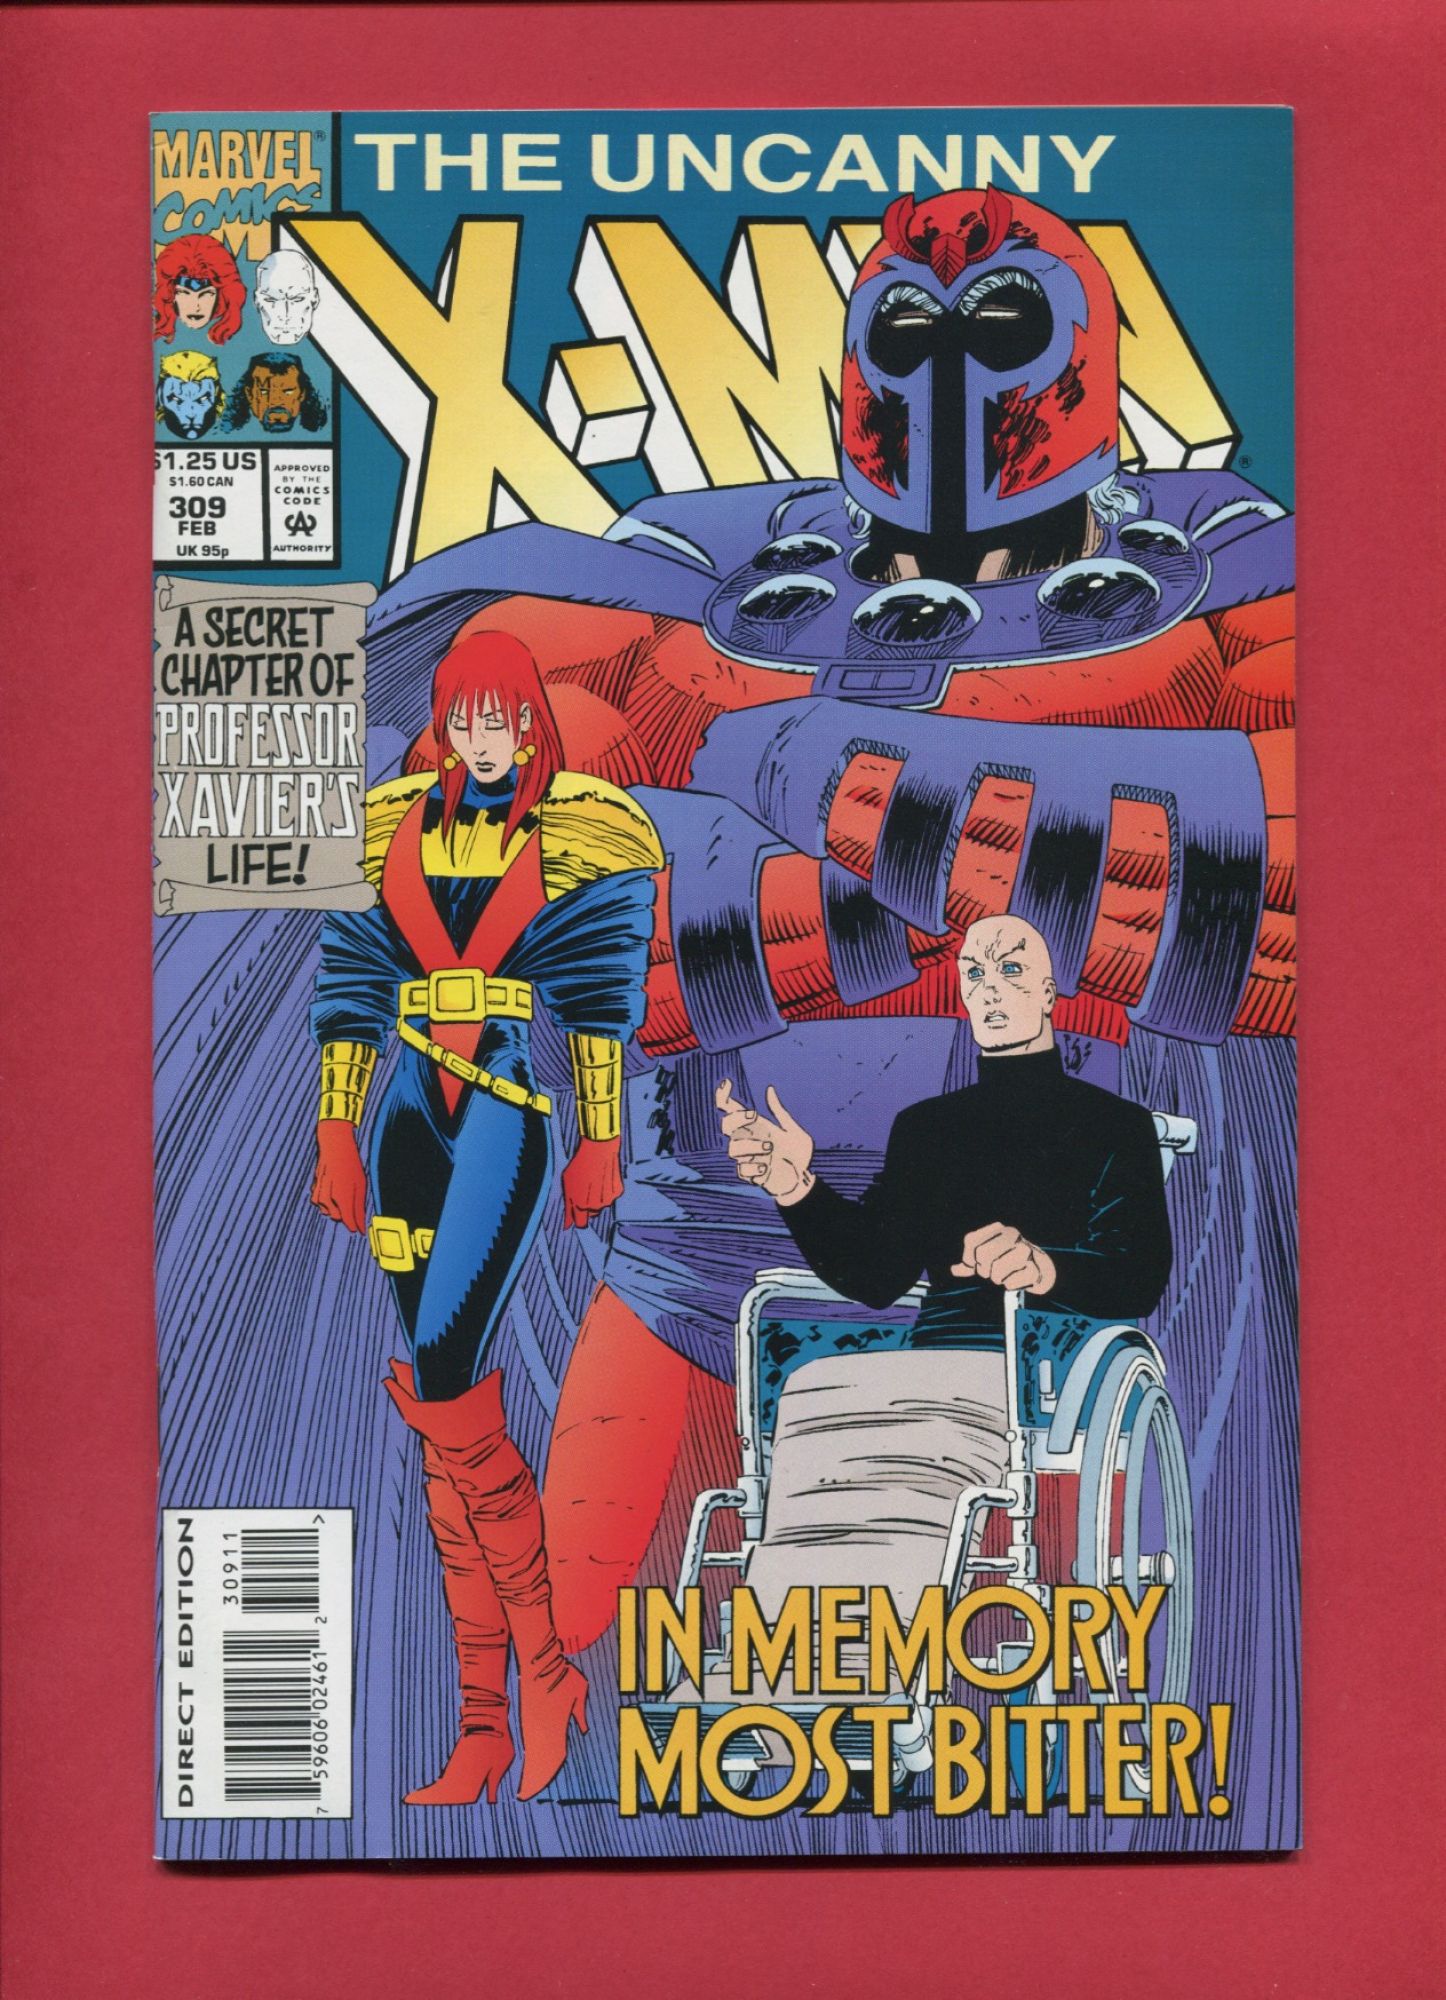 Uncanny X-Men #309, Feb 1994, 9.2 NM-